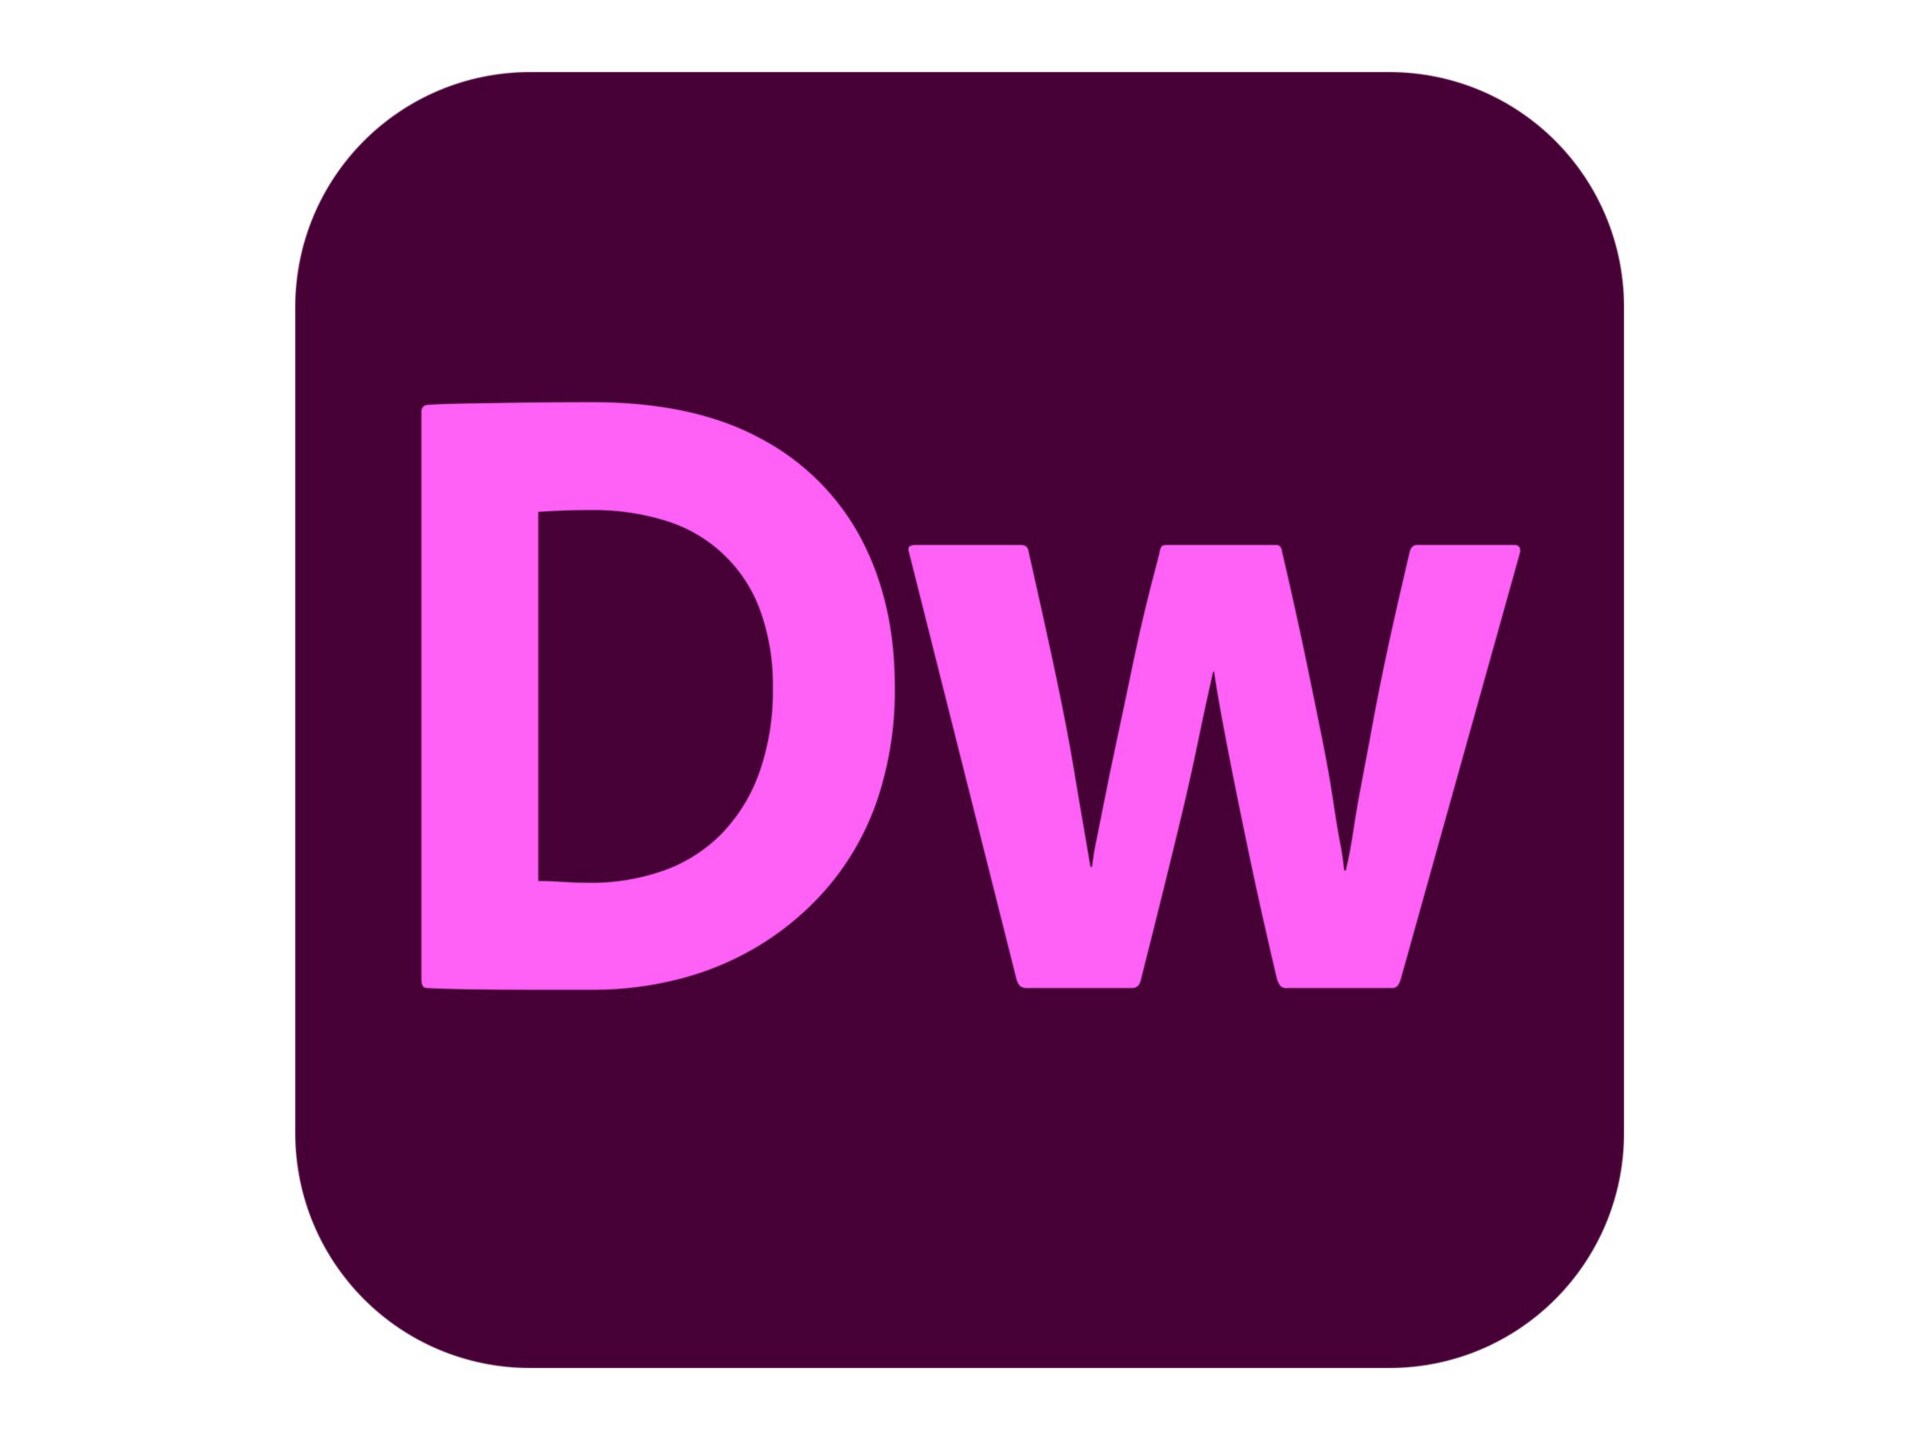 Adobe Dreamweaver CC for Enterprise - Subscription New (42 months) - 1 name